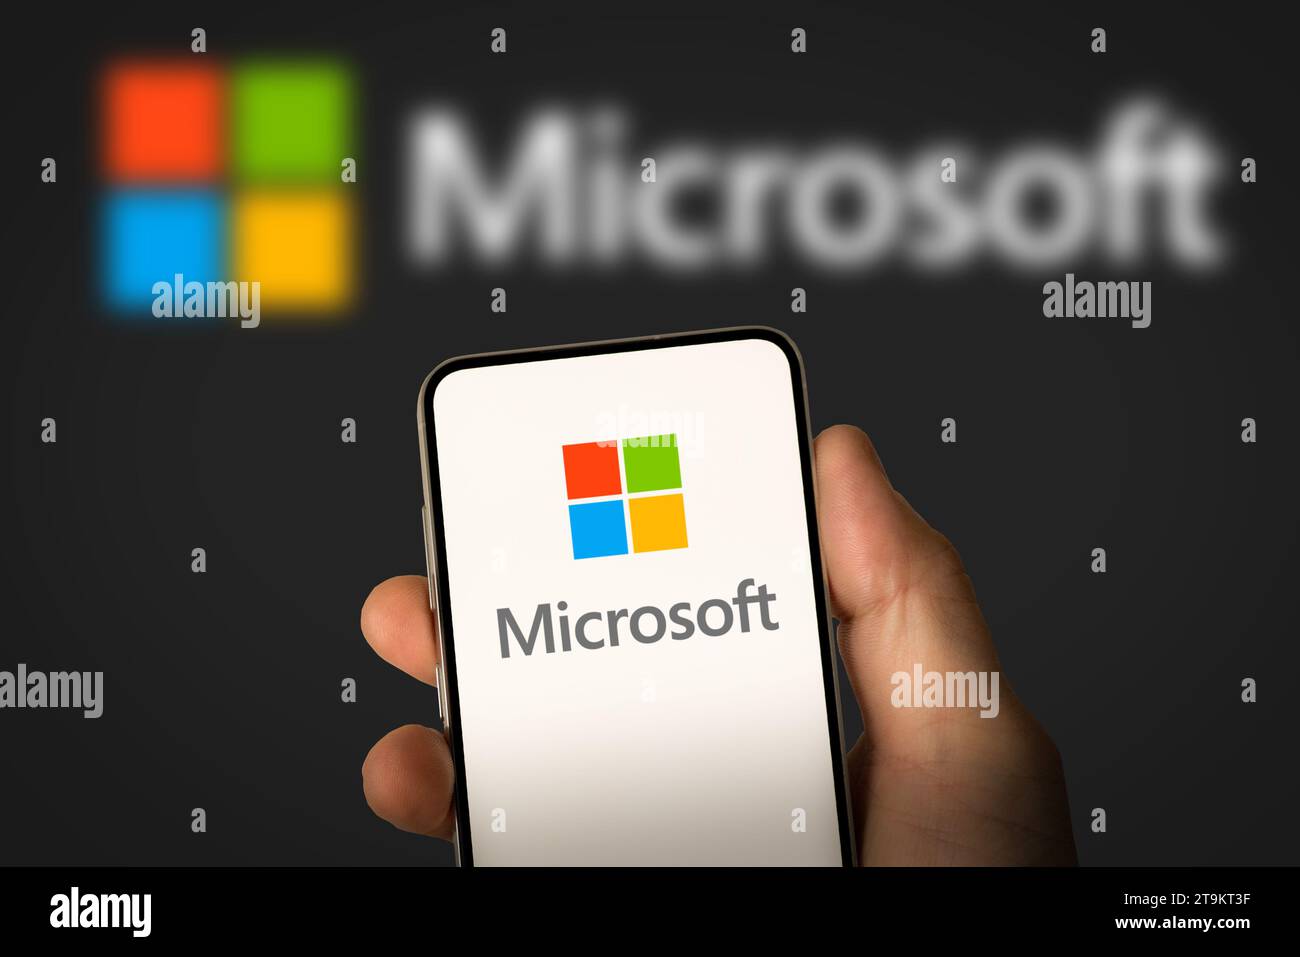 Microsoft Company logo displayed on mobile device Stock Photo